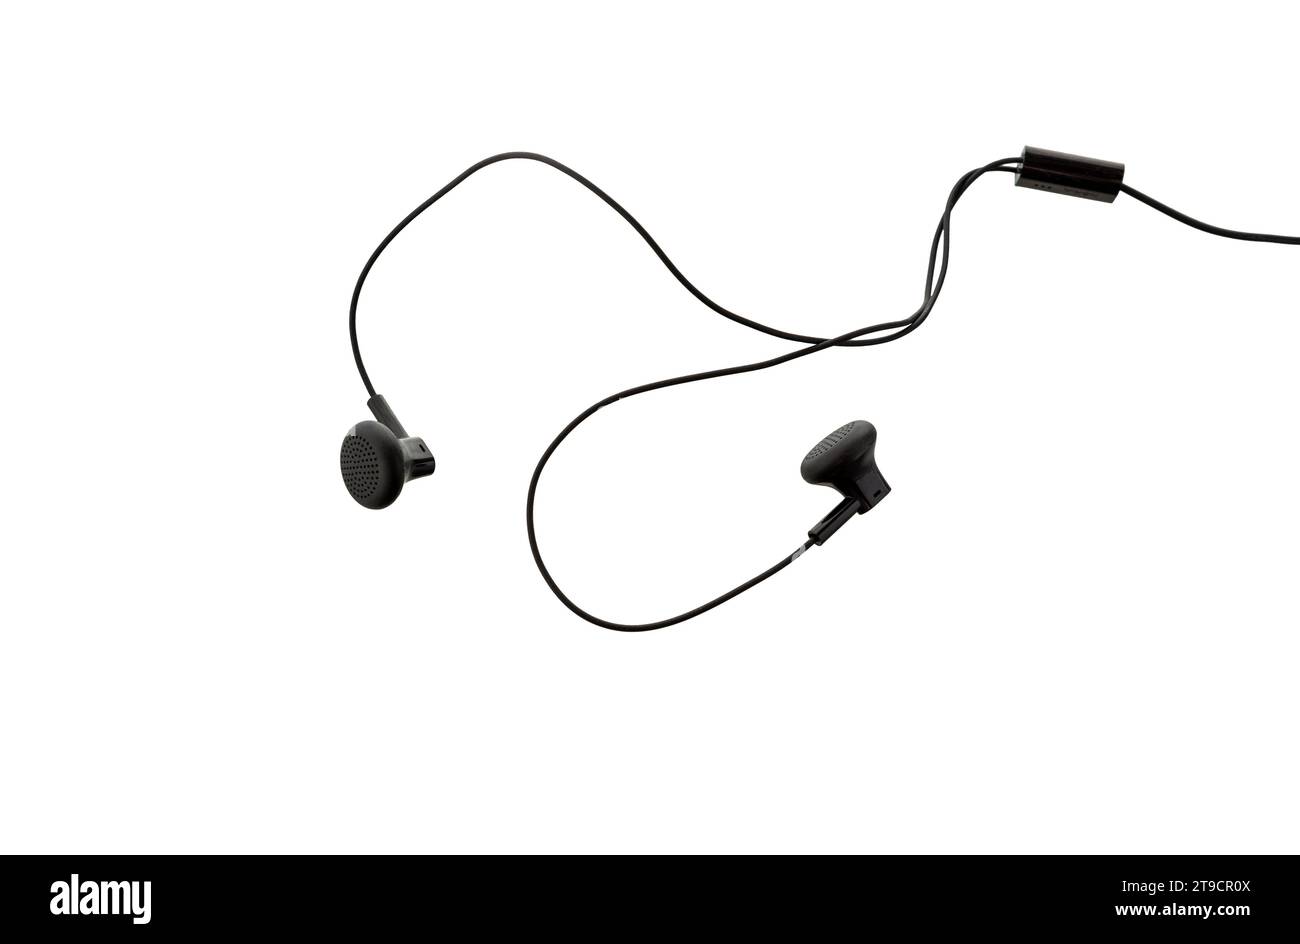 Earphones isolated on white background. Portable audio earphones. Stock Photo